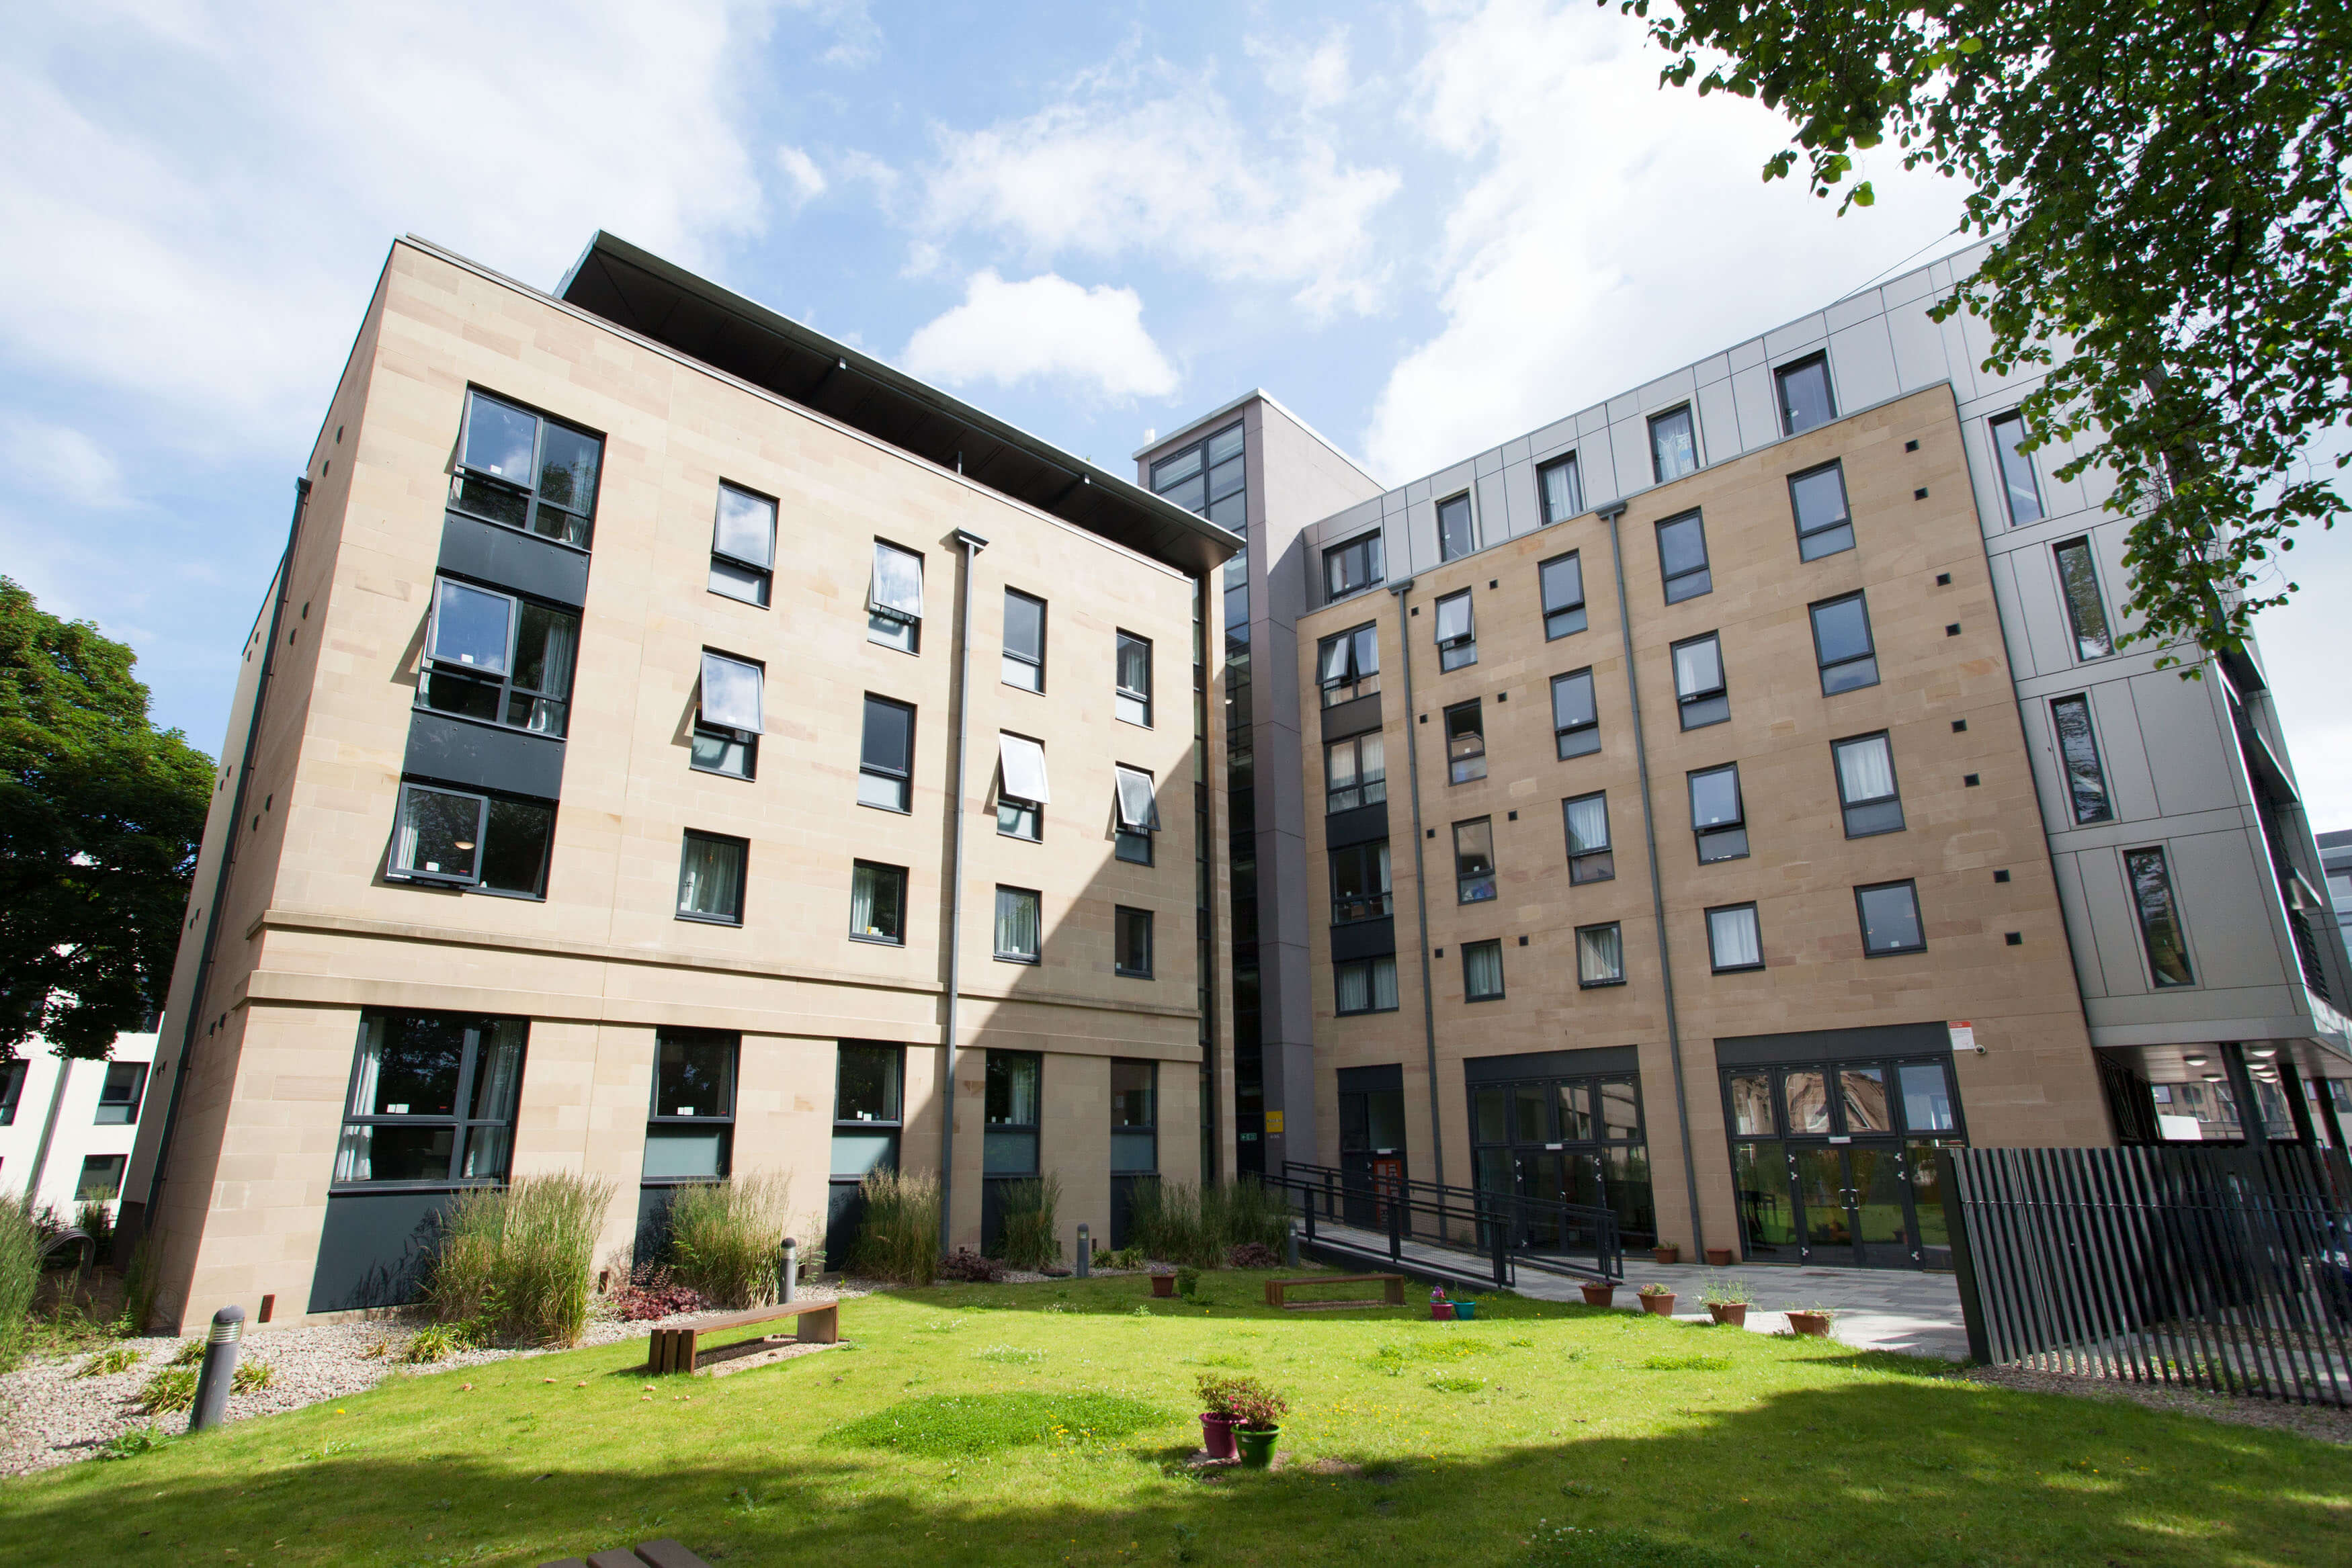 Unite Students accommodation at Chalmers Street in Edinburgh